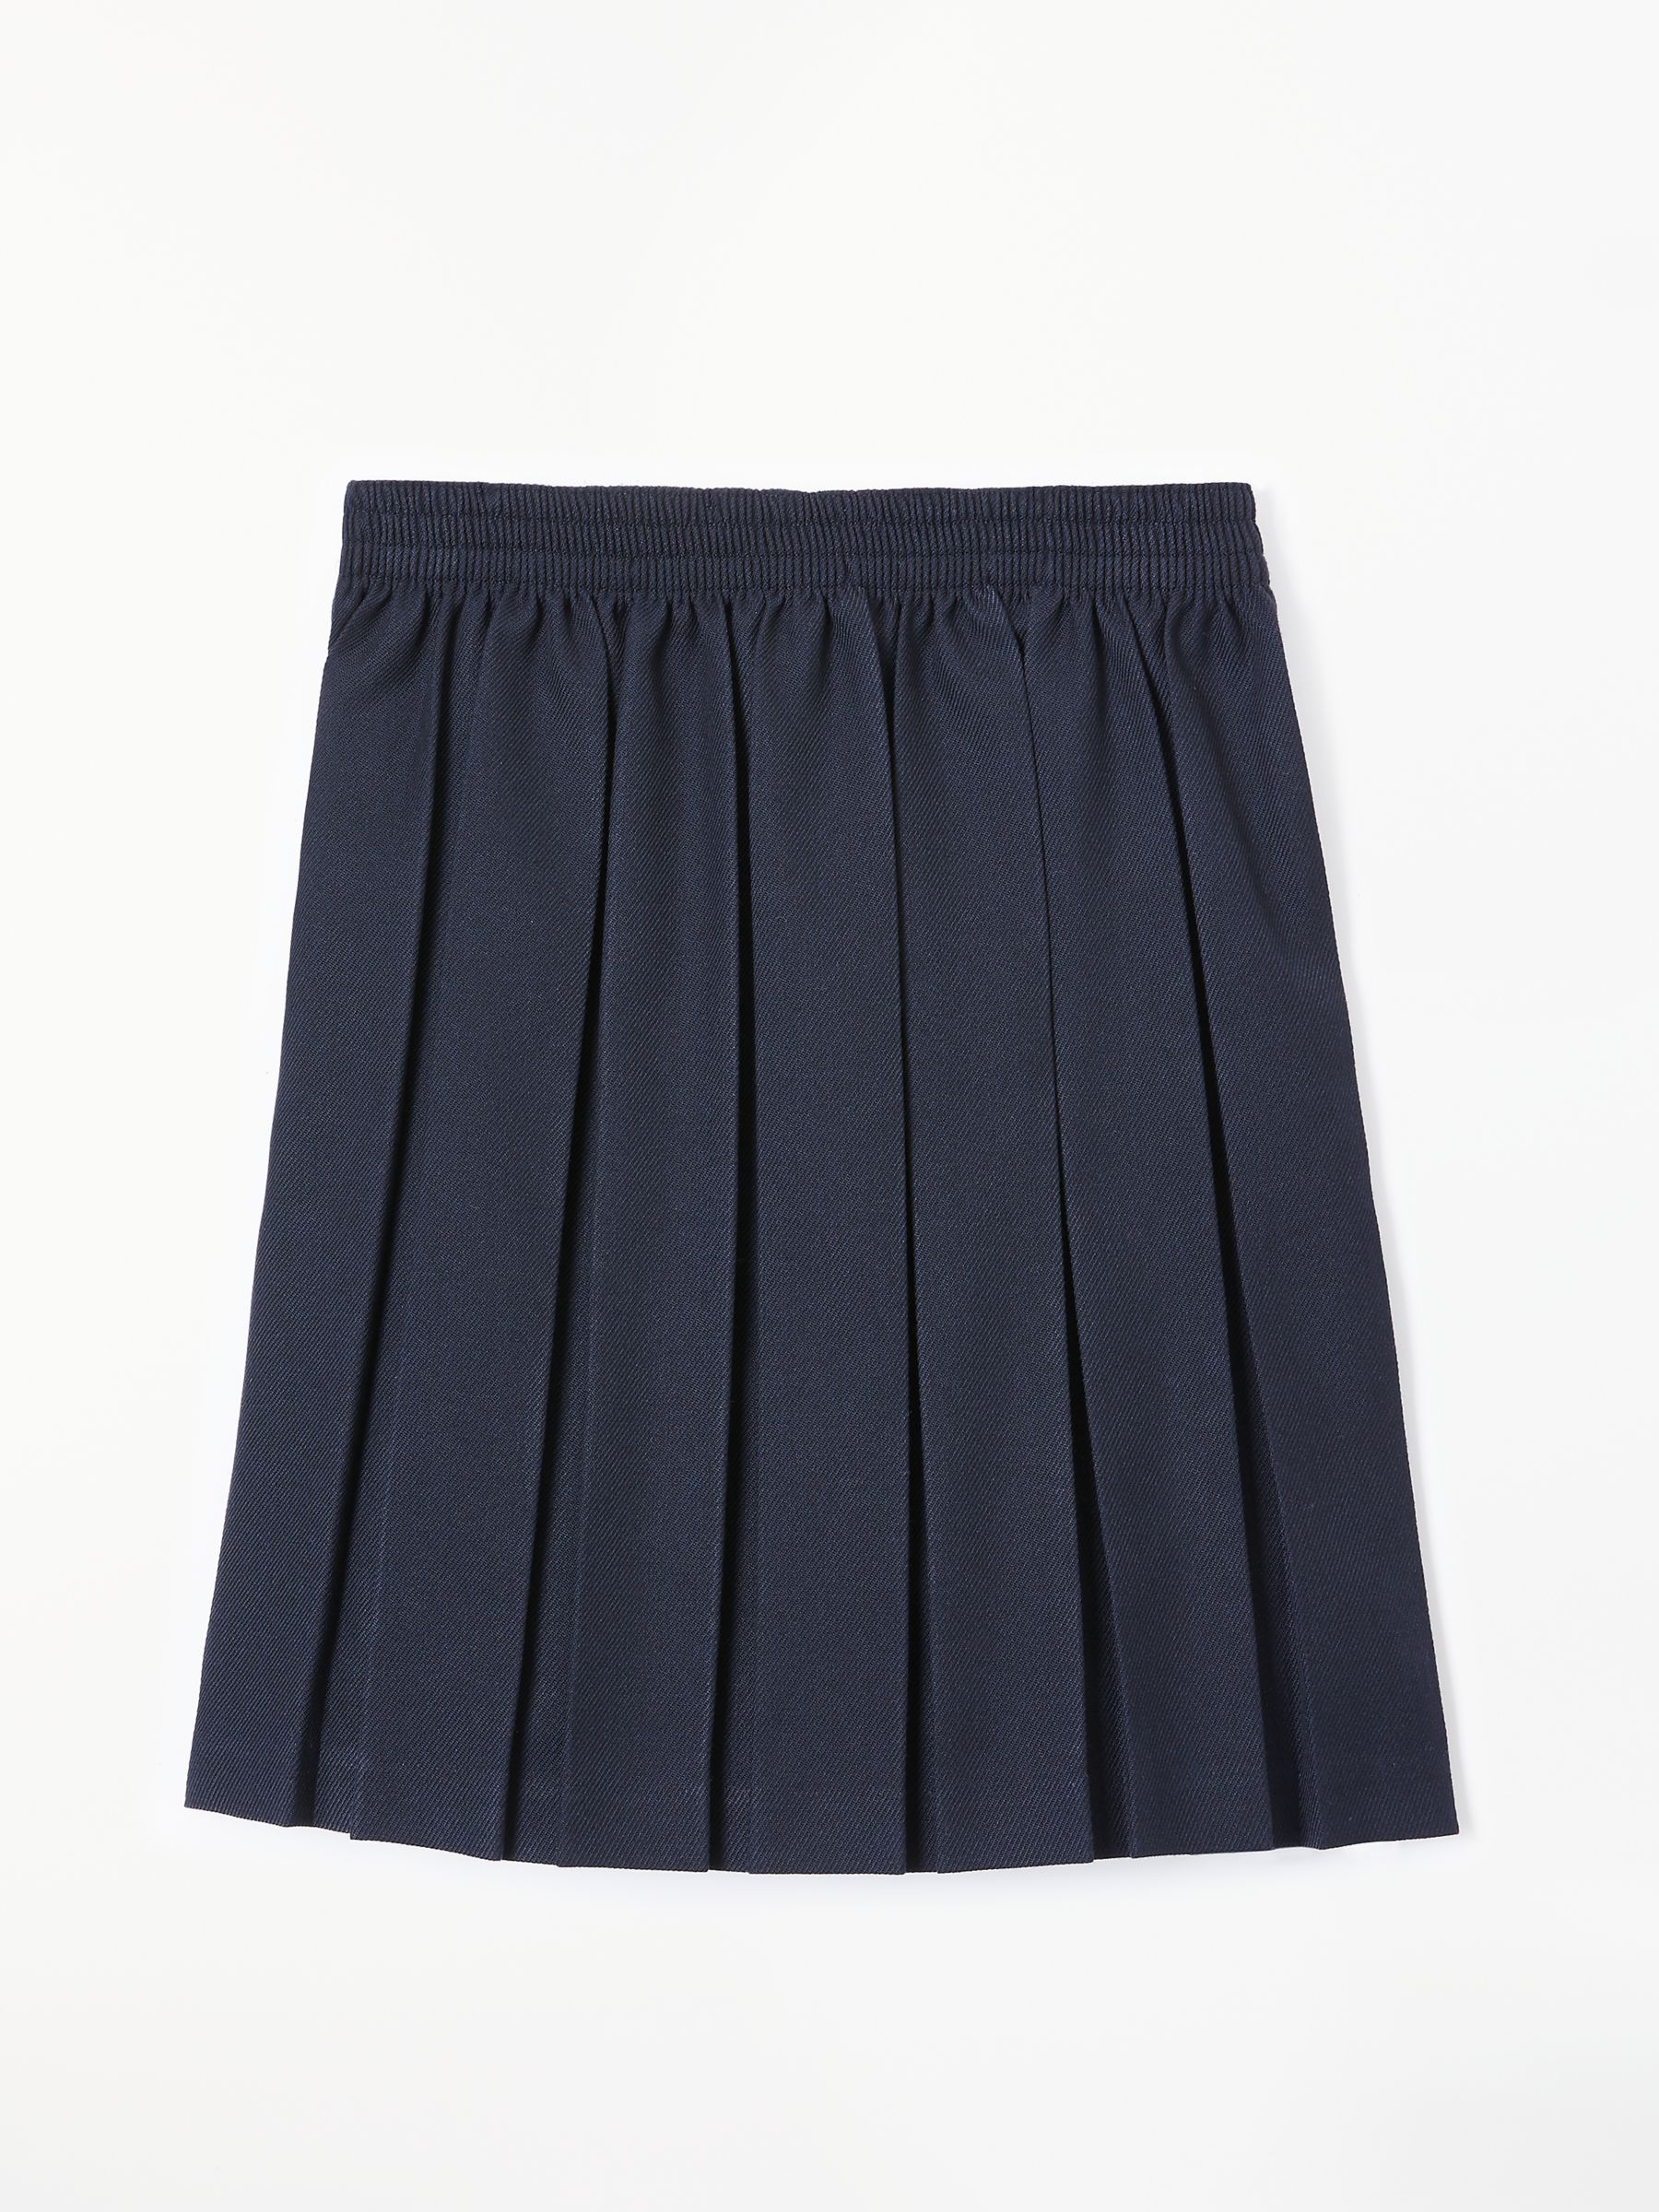 John Lewis & Partners Girls' Stain Resistant Pleated School Skirt, Navy ...